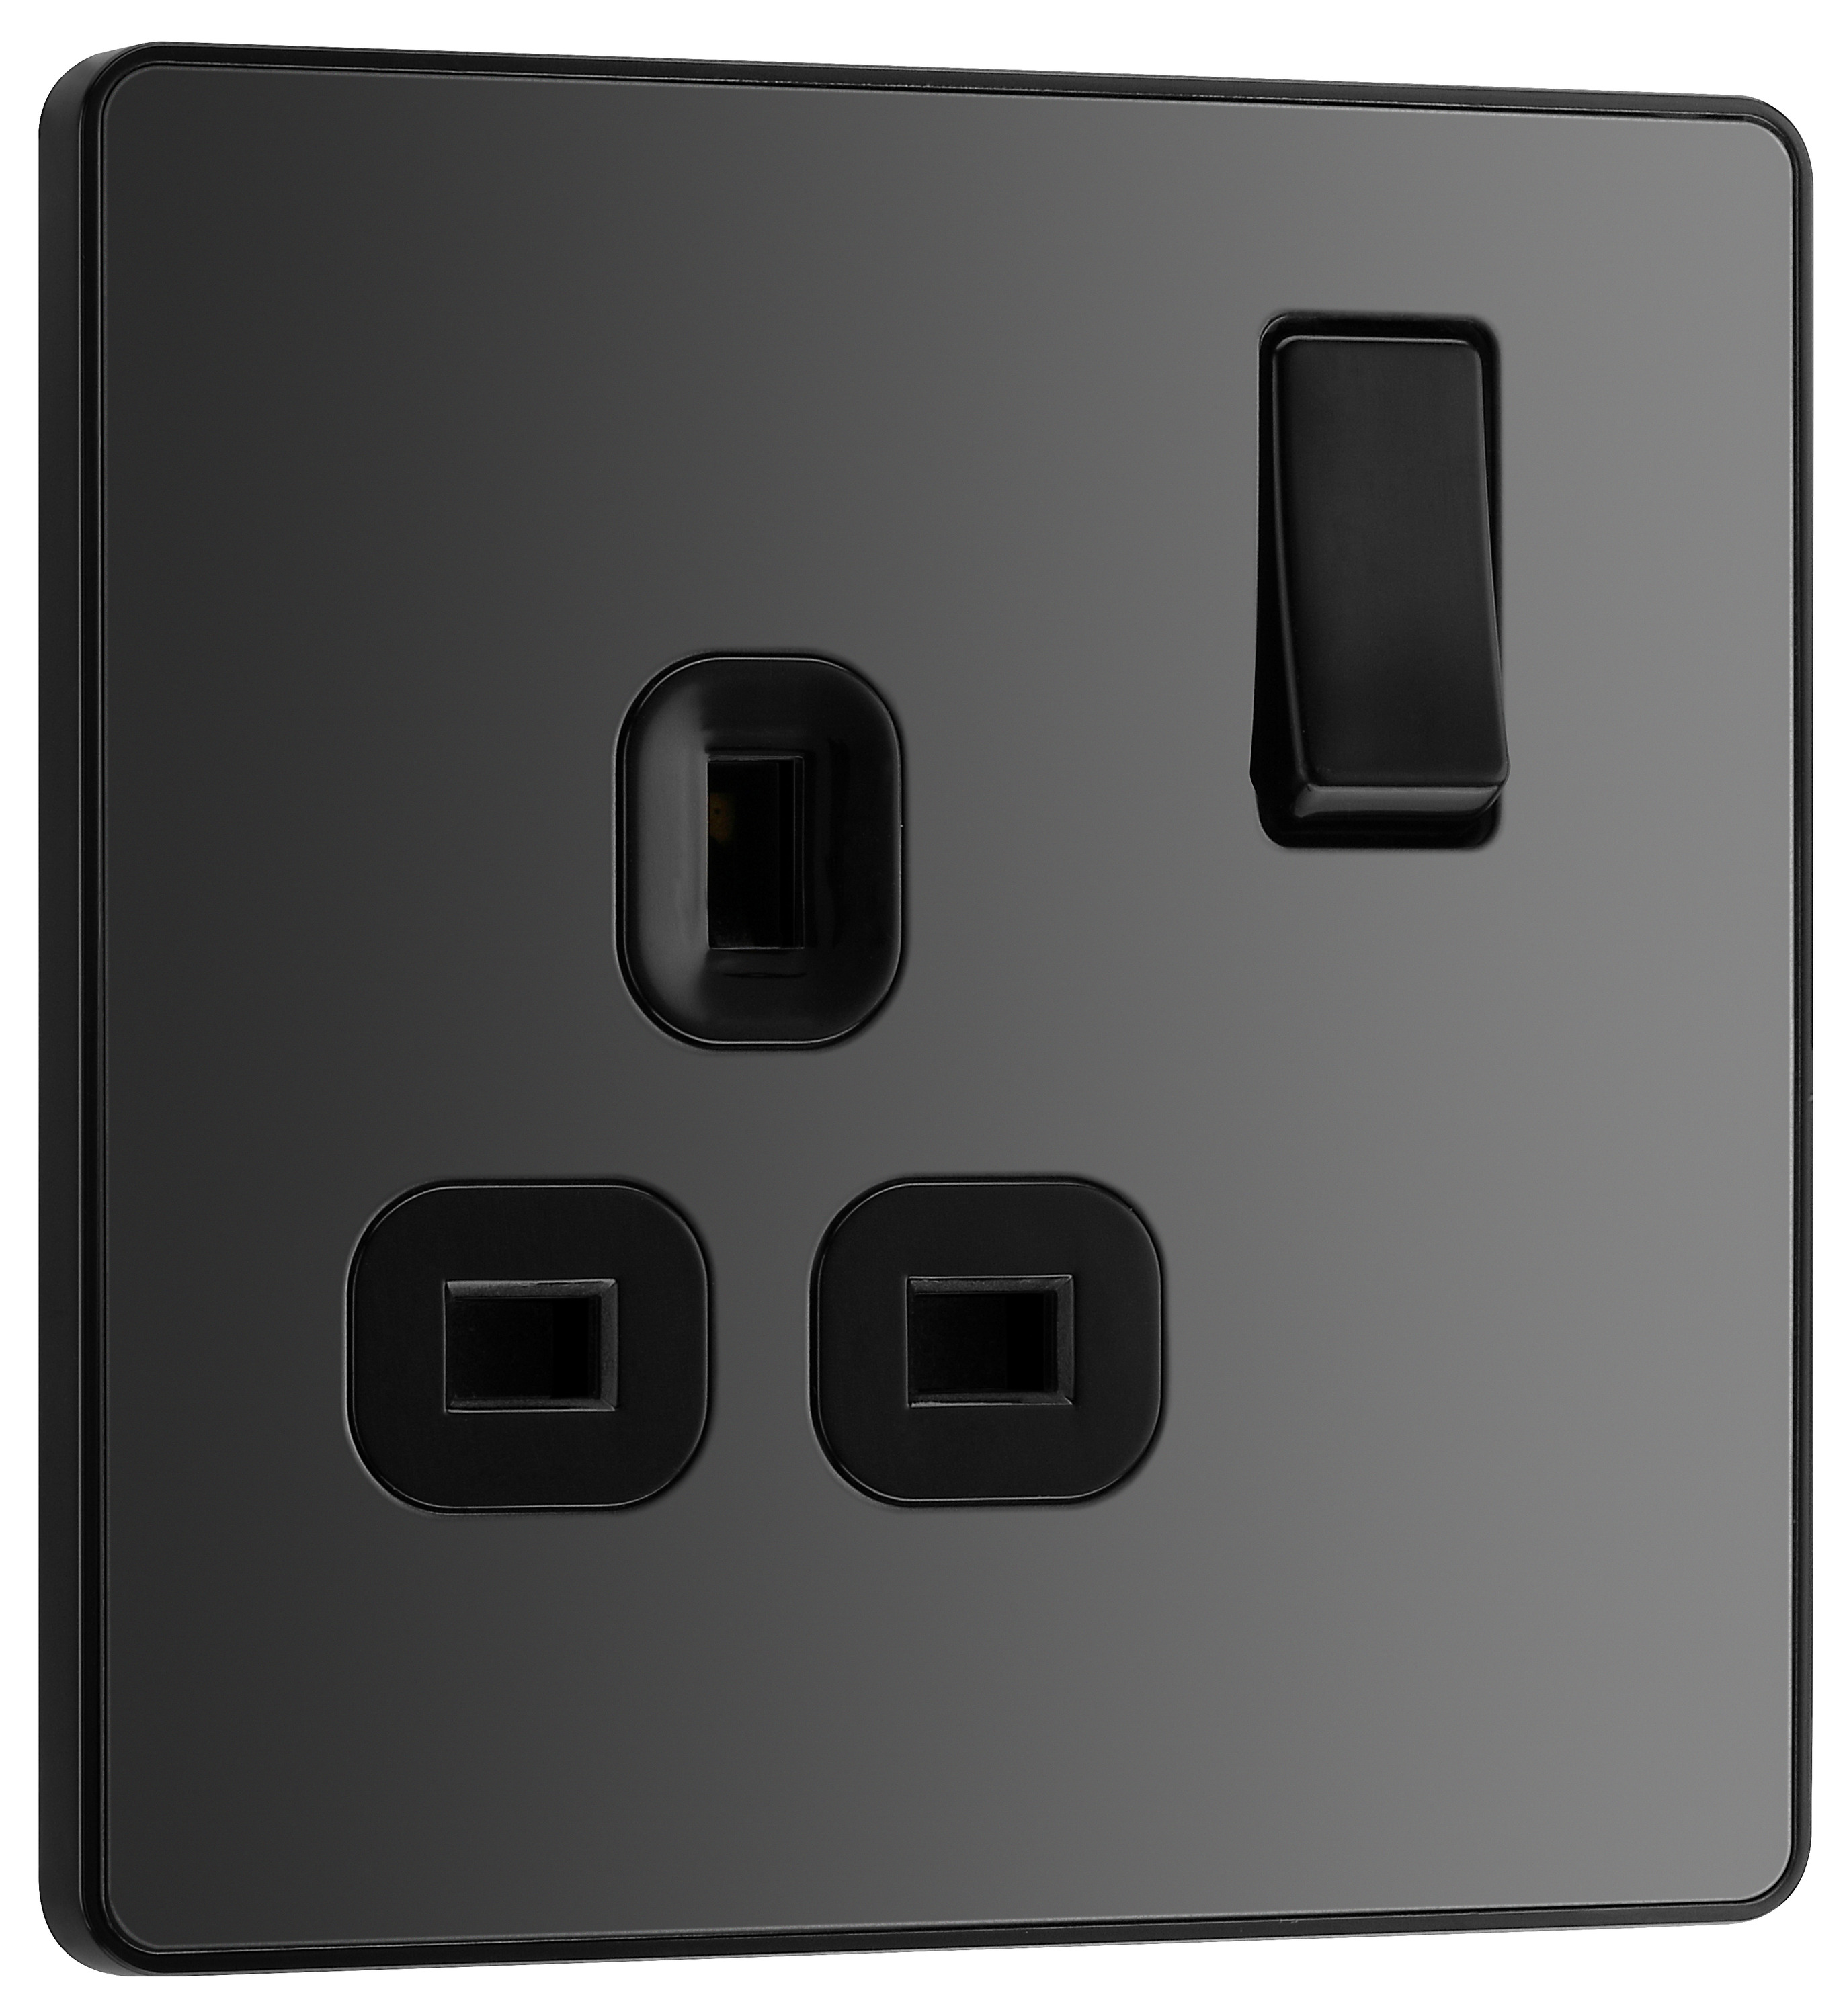 Image of BG Evolve Black Chrome 13A Single Switched Power Socket